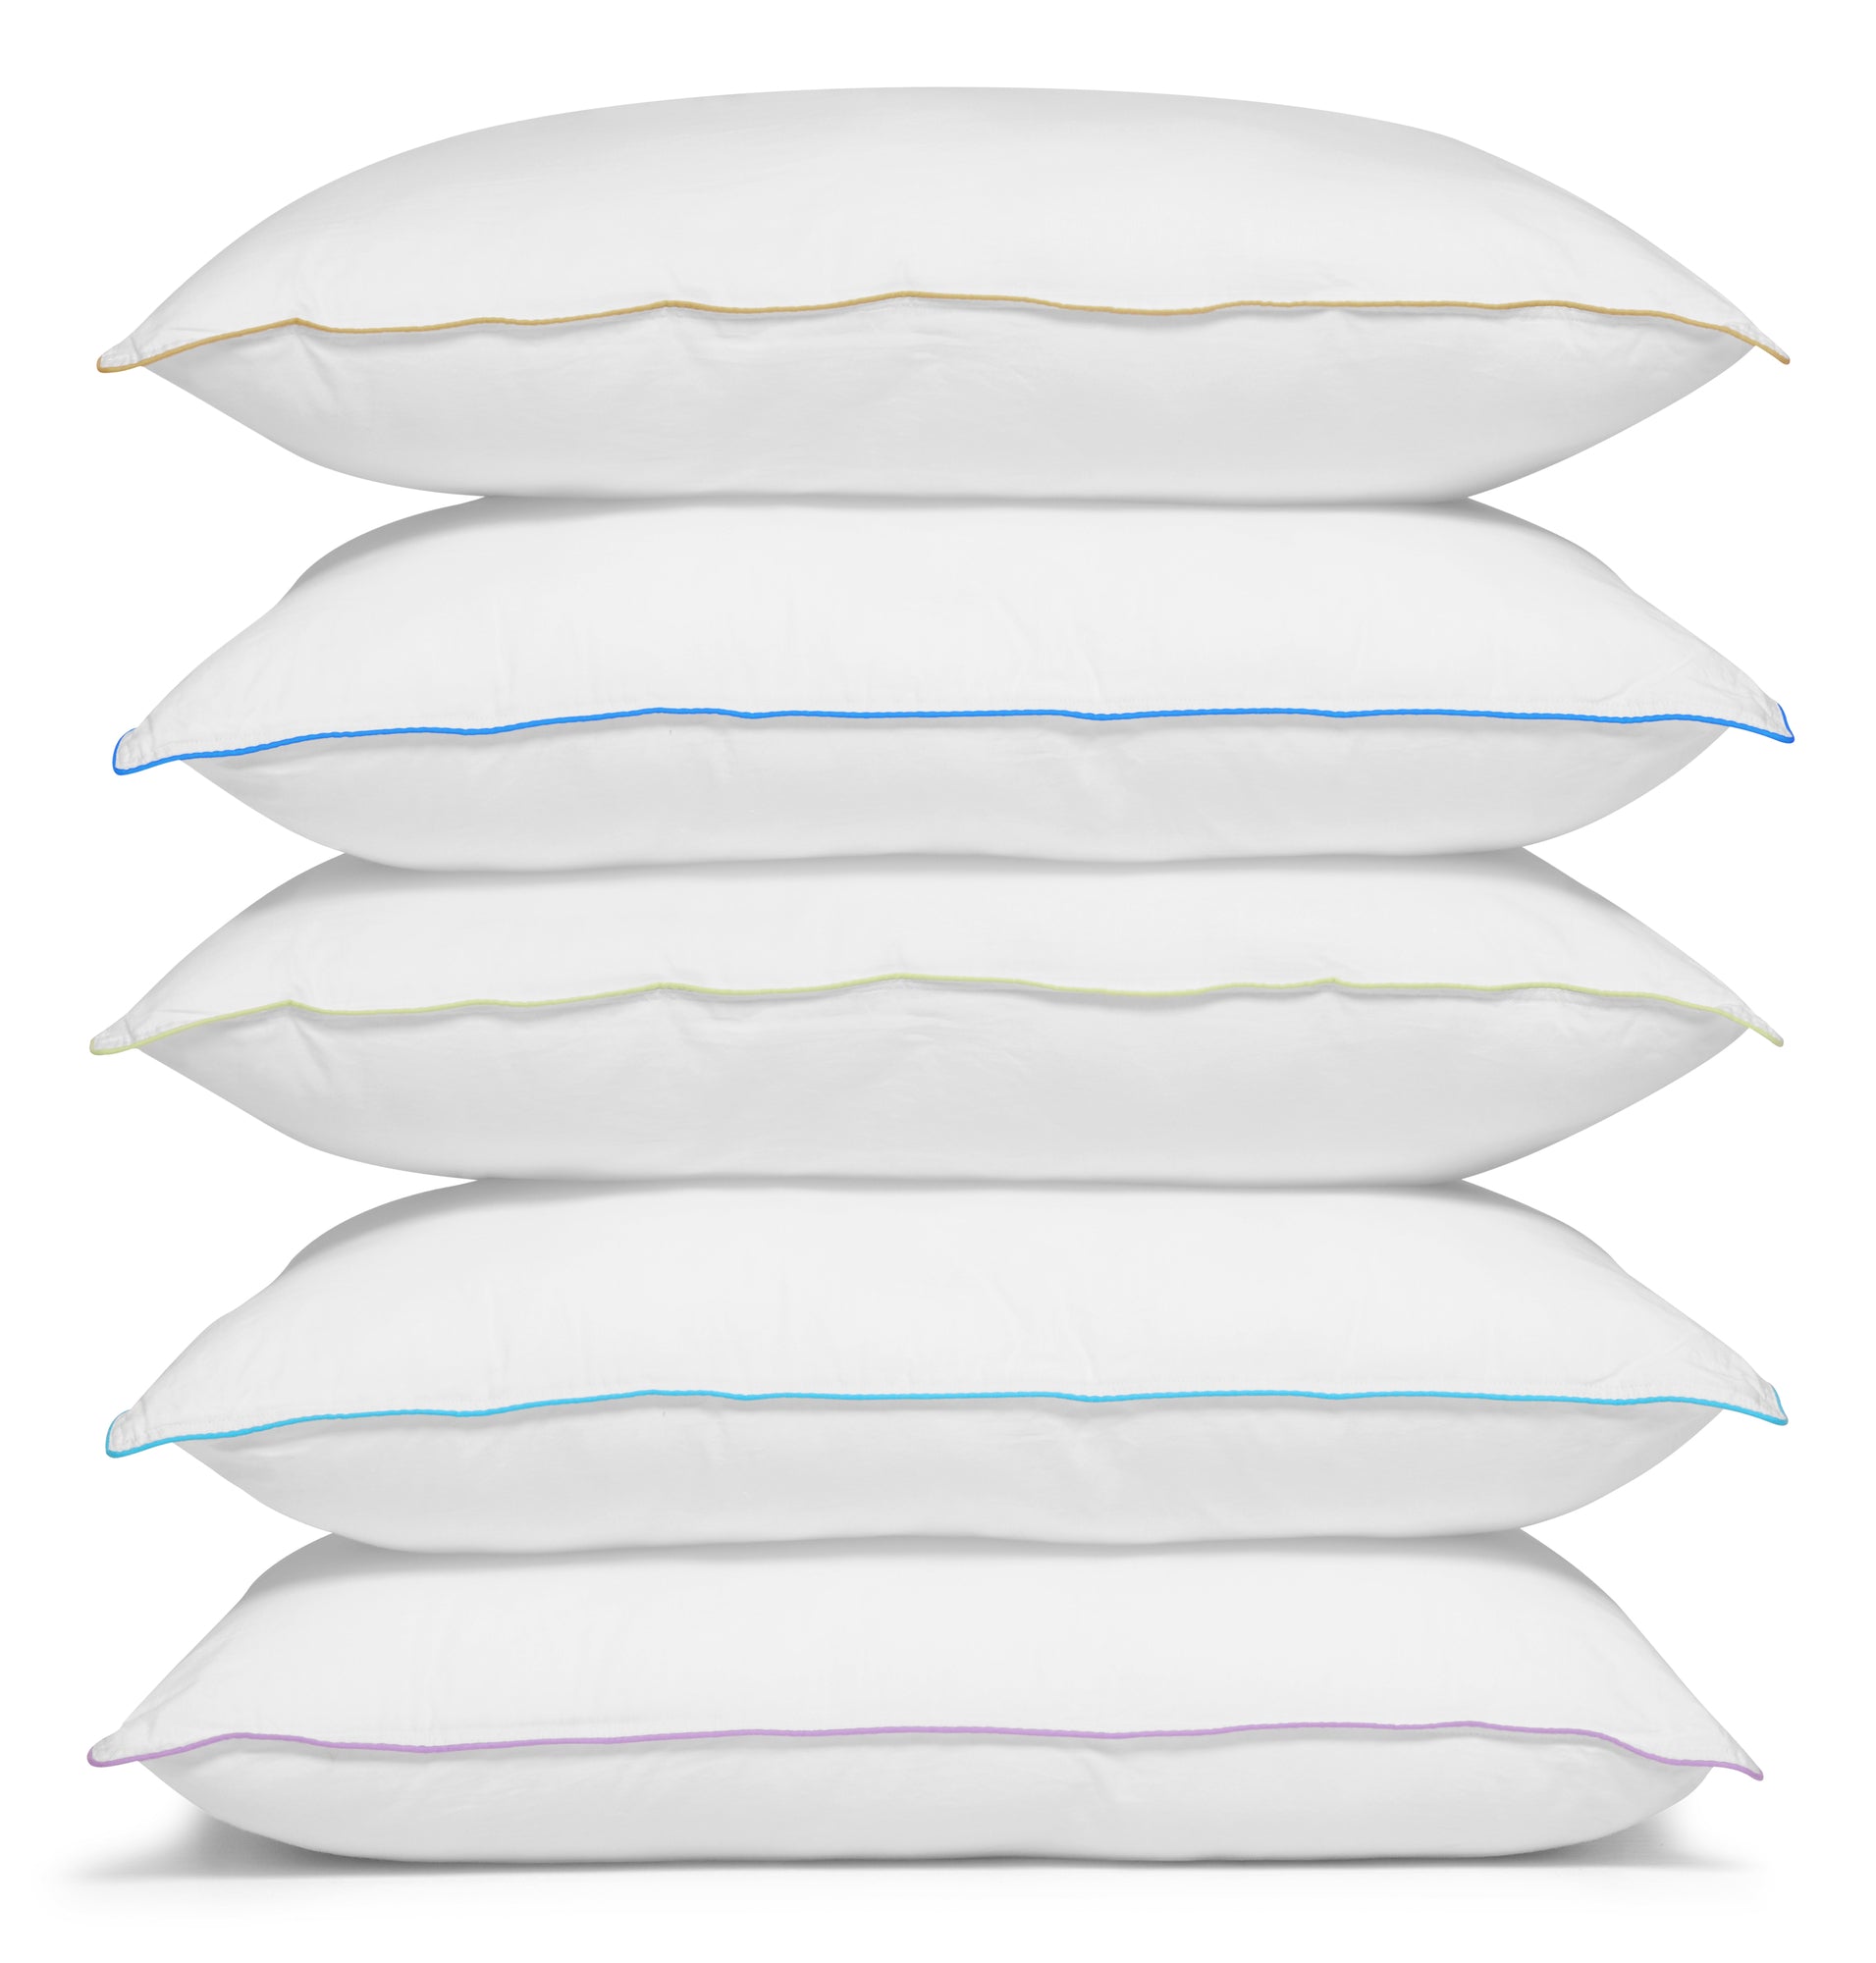 shredded latex pillows